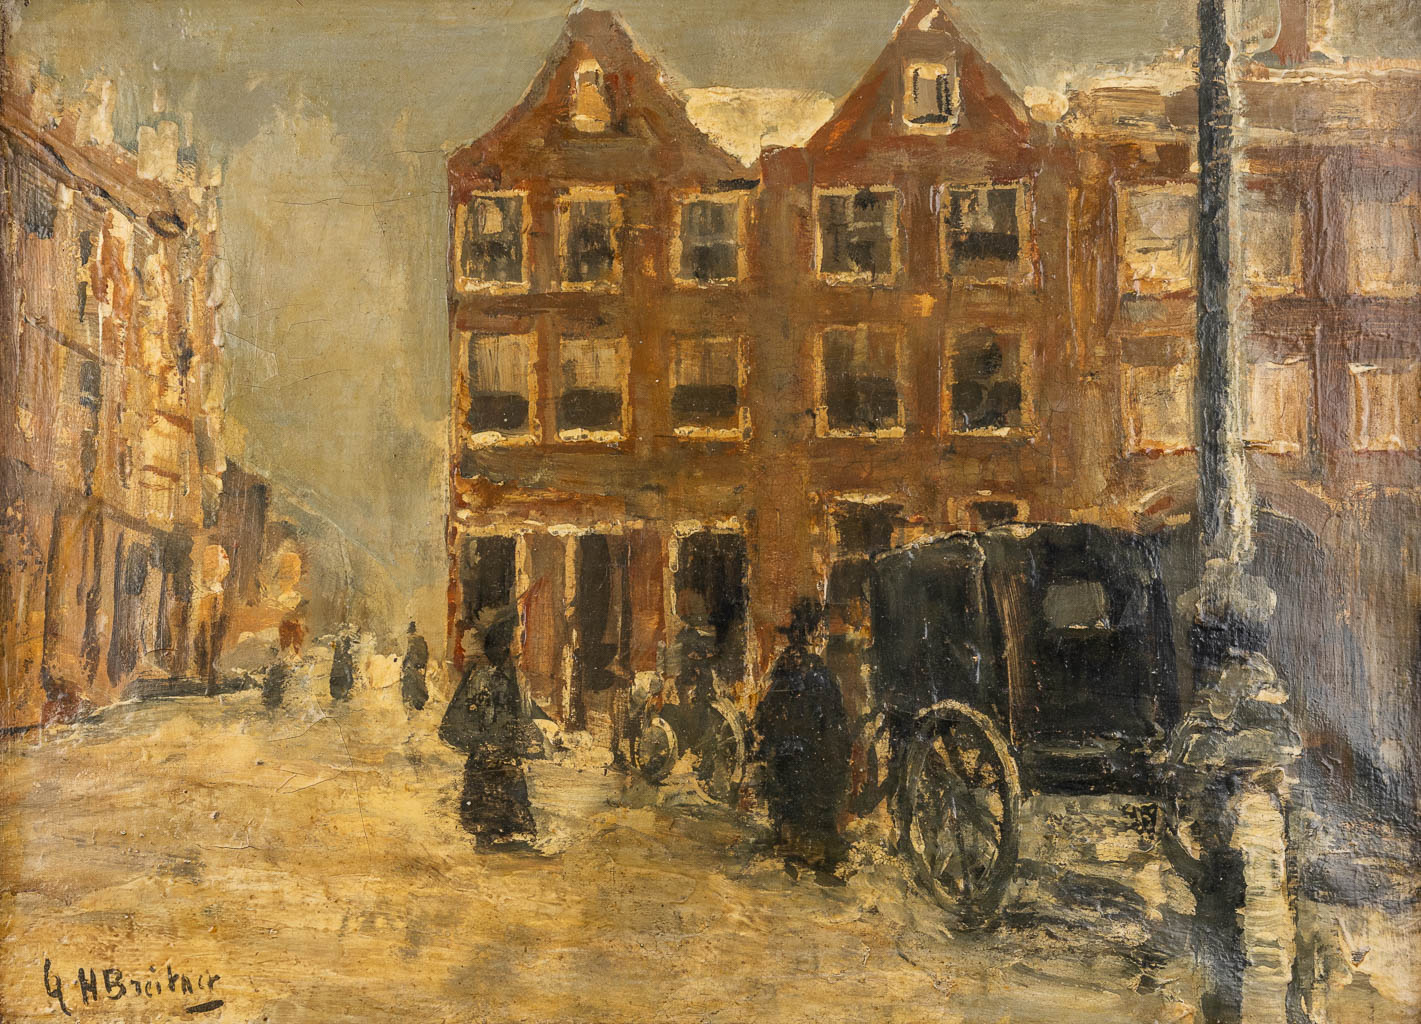 Georg Hendrik BREITNER (1857-1923) 'Snow in Den Haag' oil on canvas. (W:34 x H:25 cm)